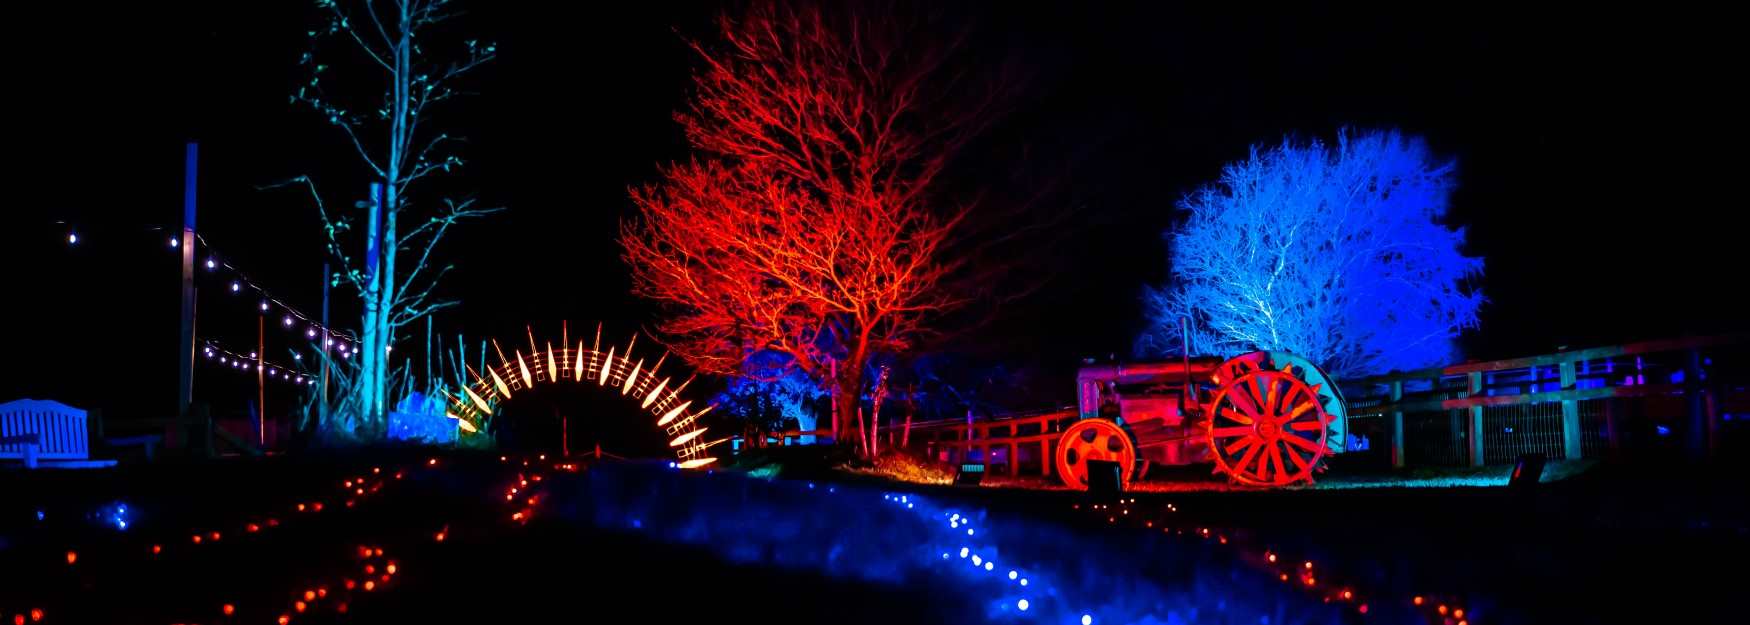 Enchanted Light Trail at Cotswold Farm Park